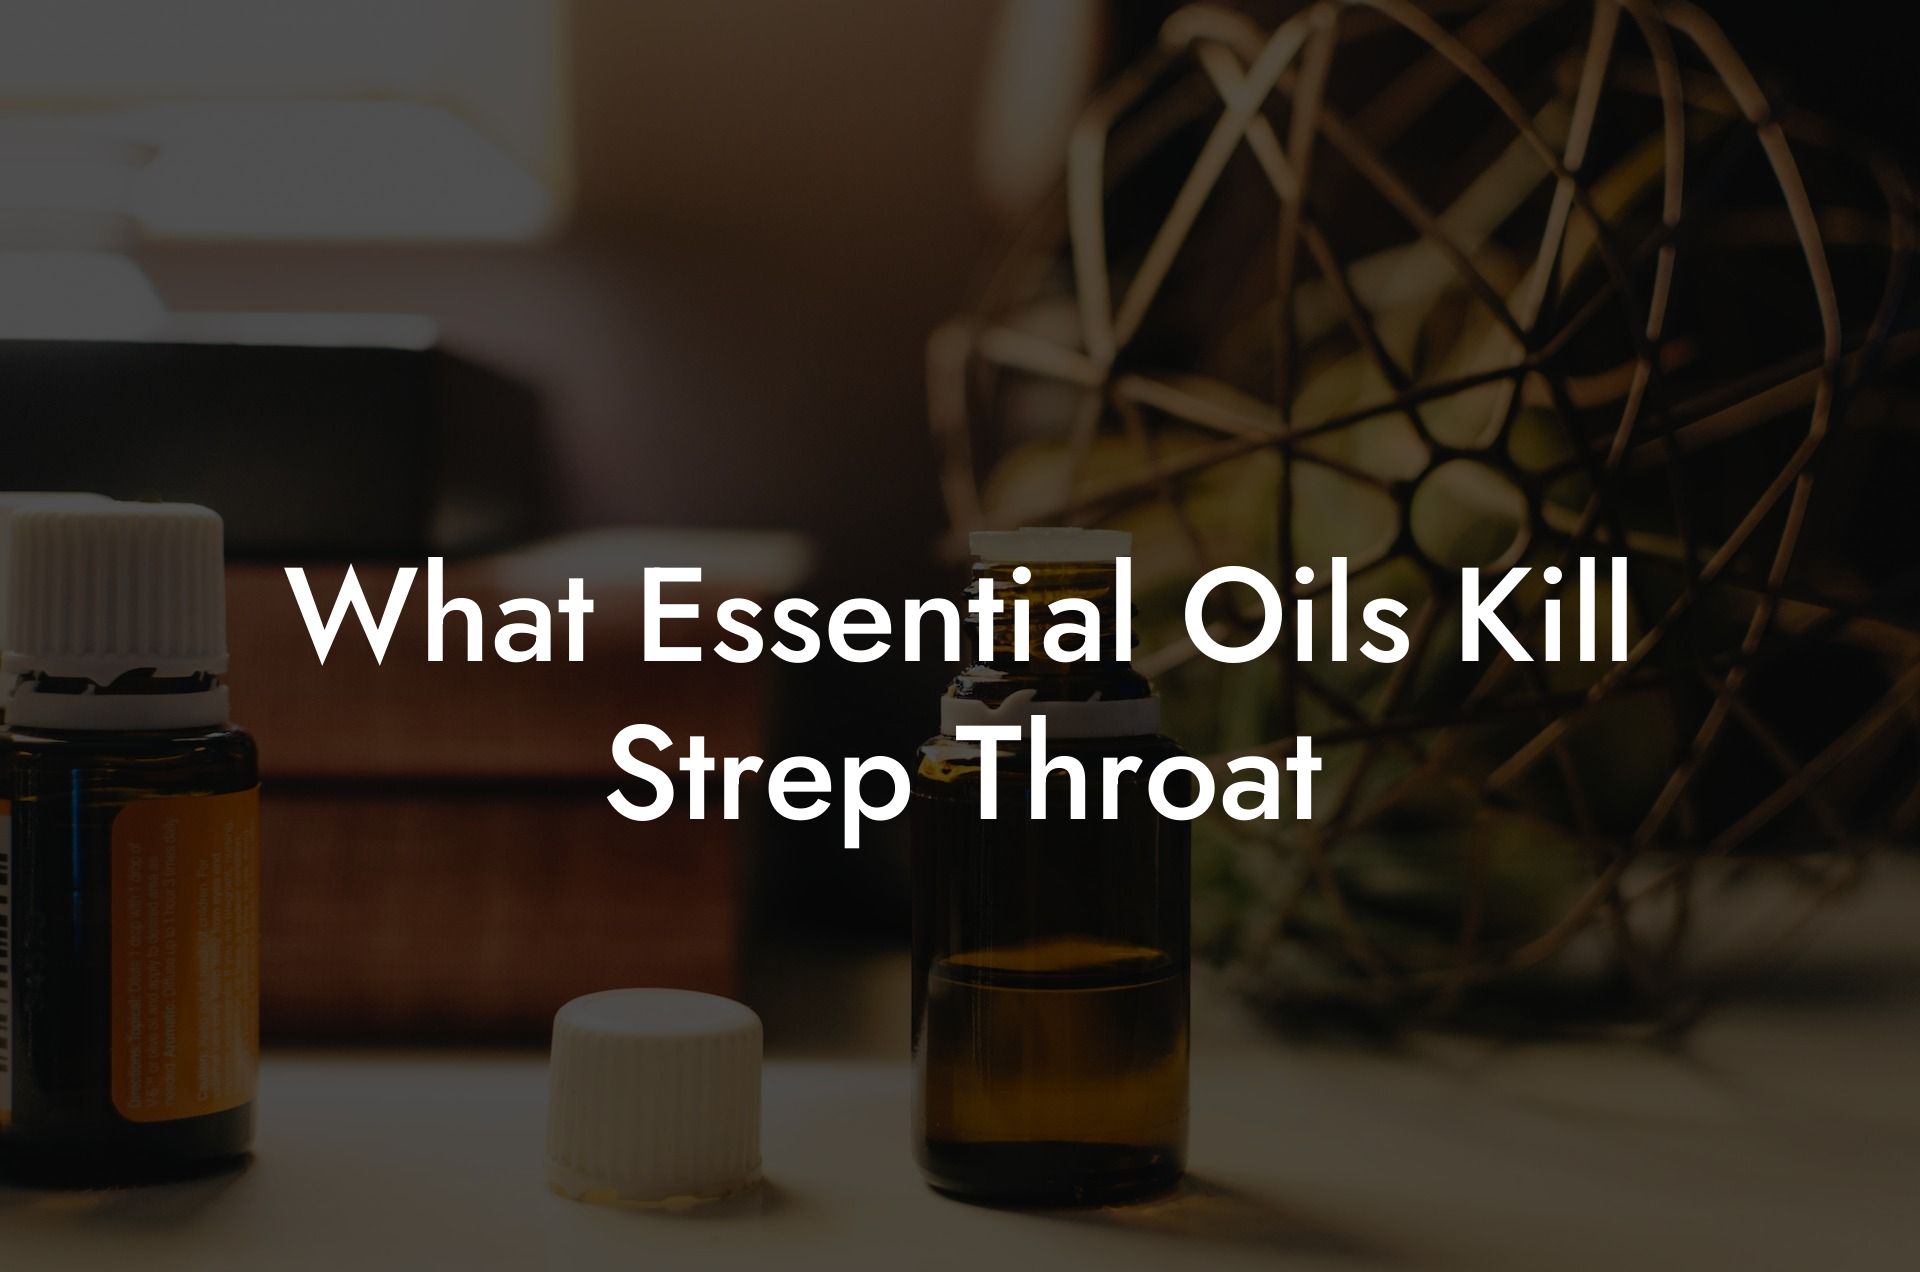 What Essential Oils Kill Strep Throat